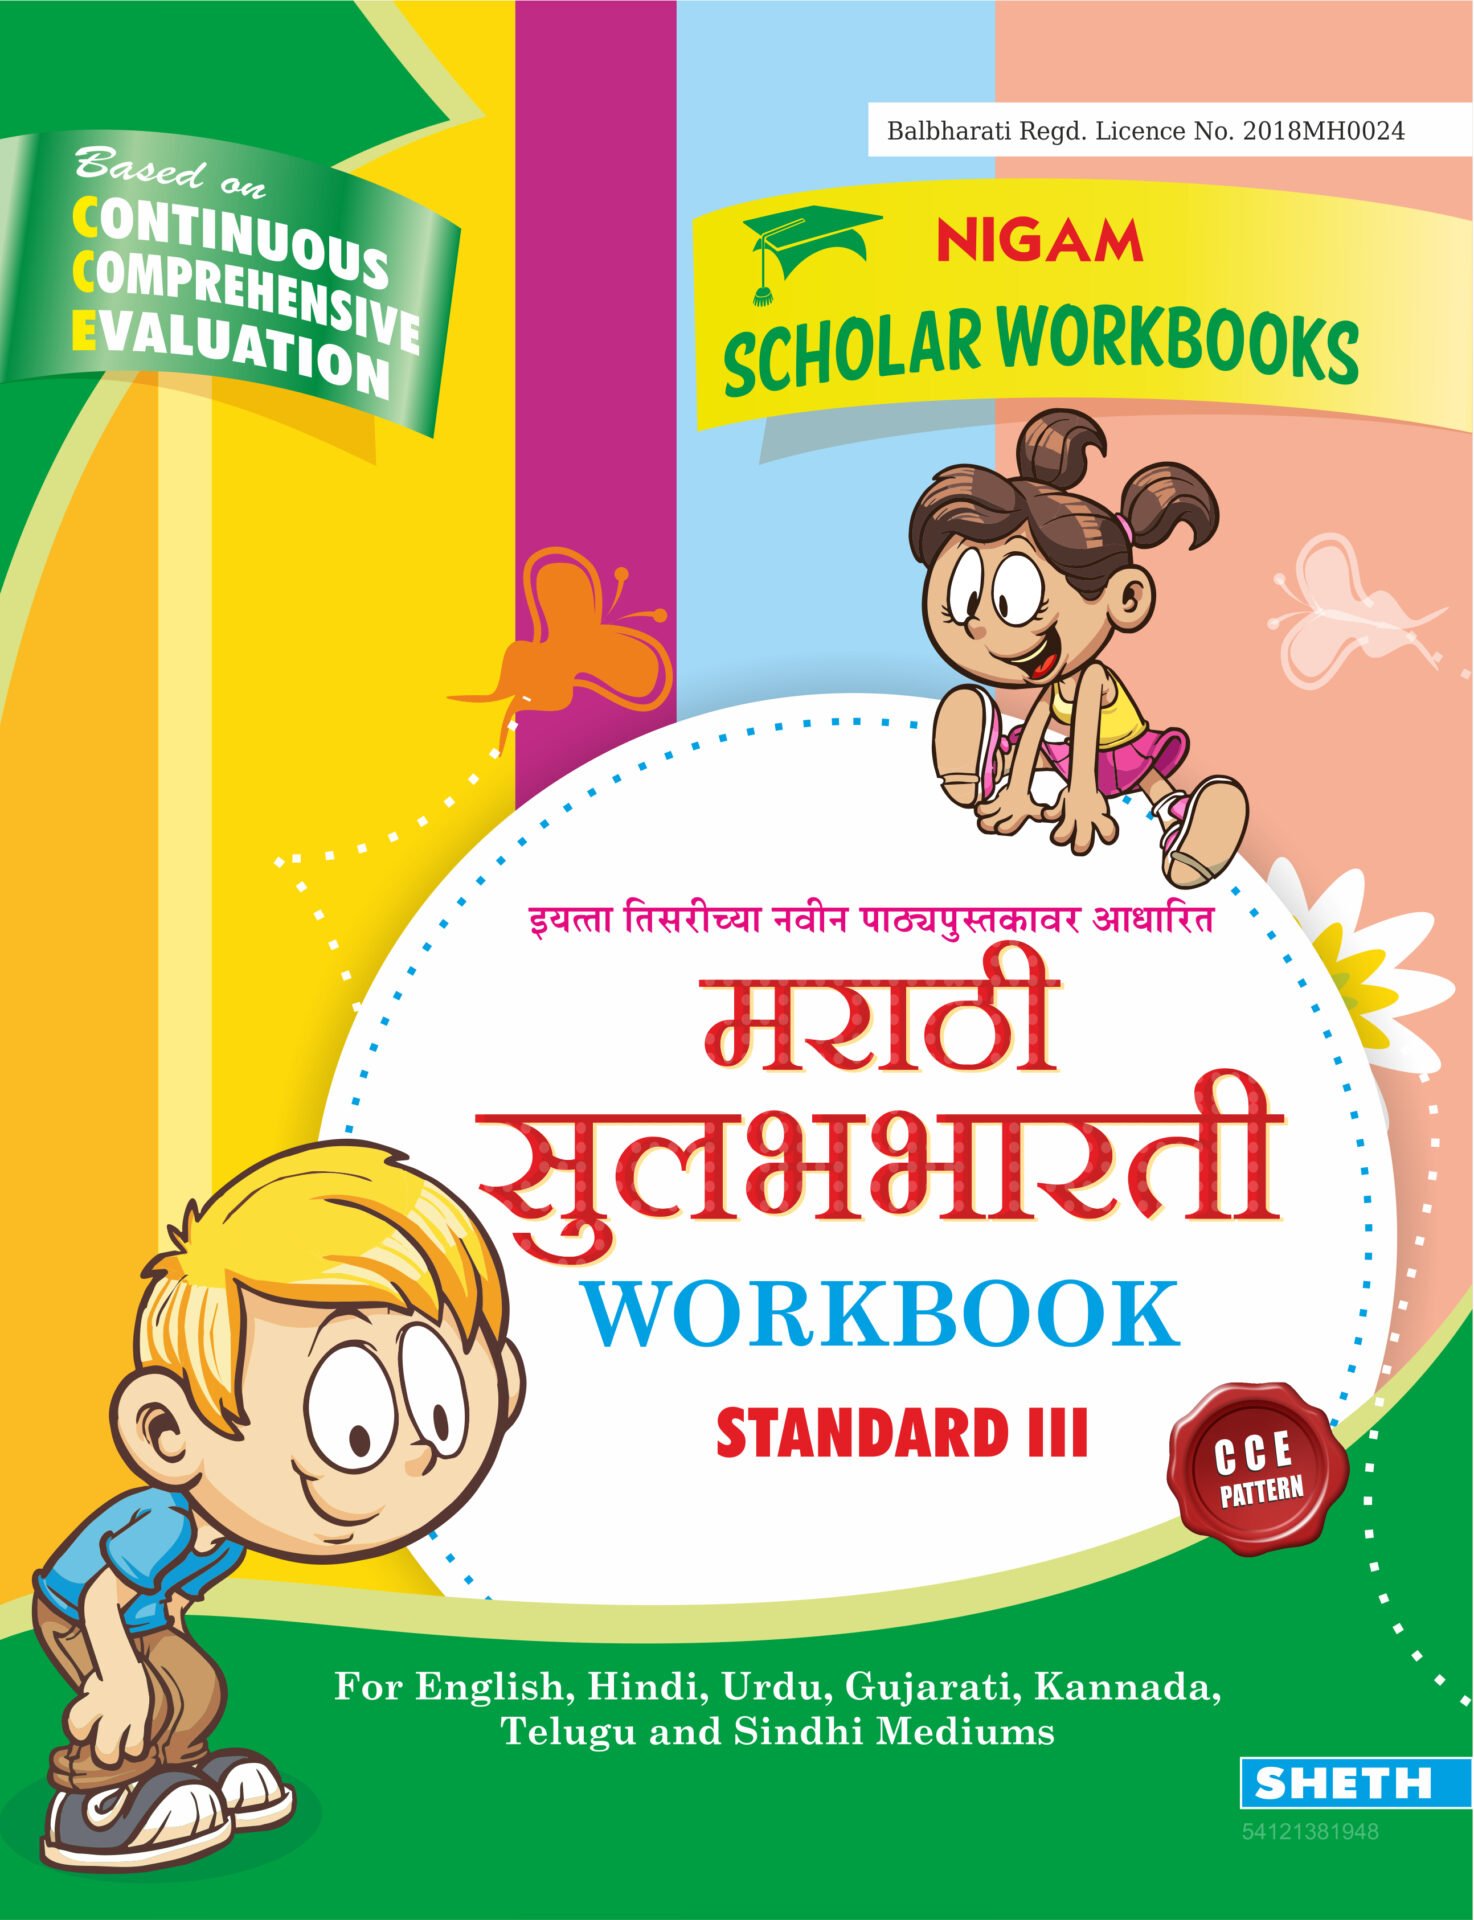 CCE Pattern Nigam Scholar Workbooks Marathi Sulabhbharati Workbook Standard 3 1